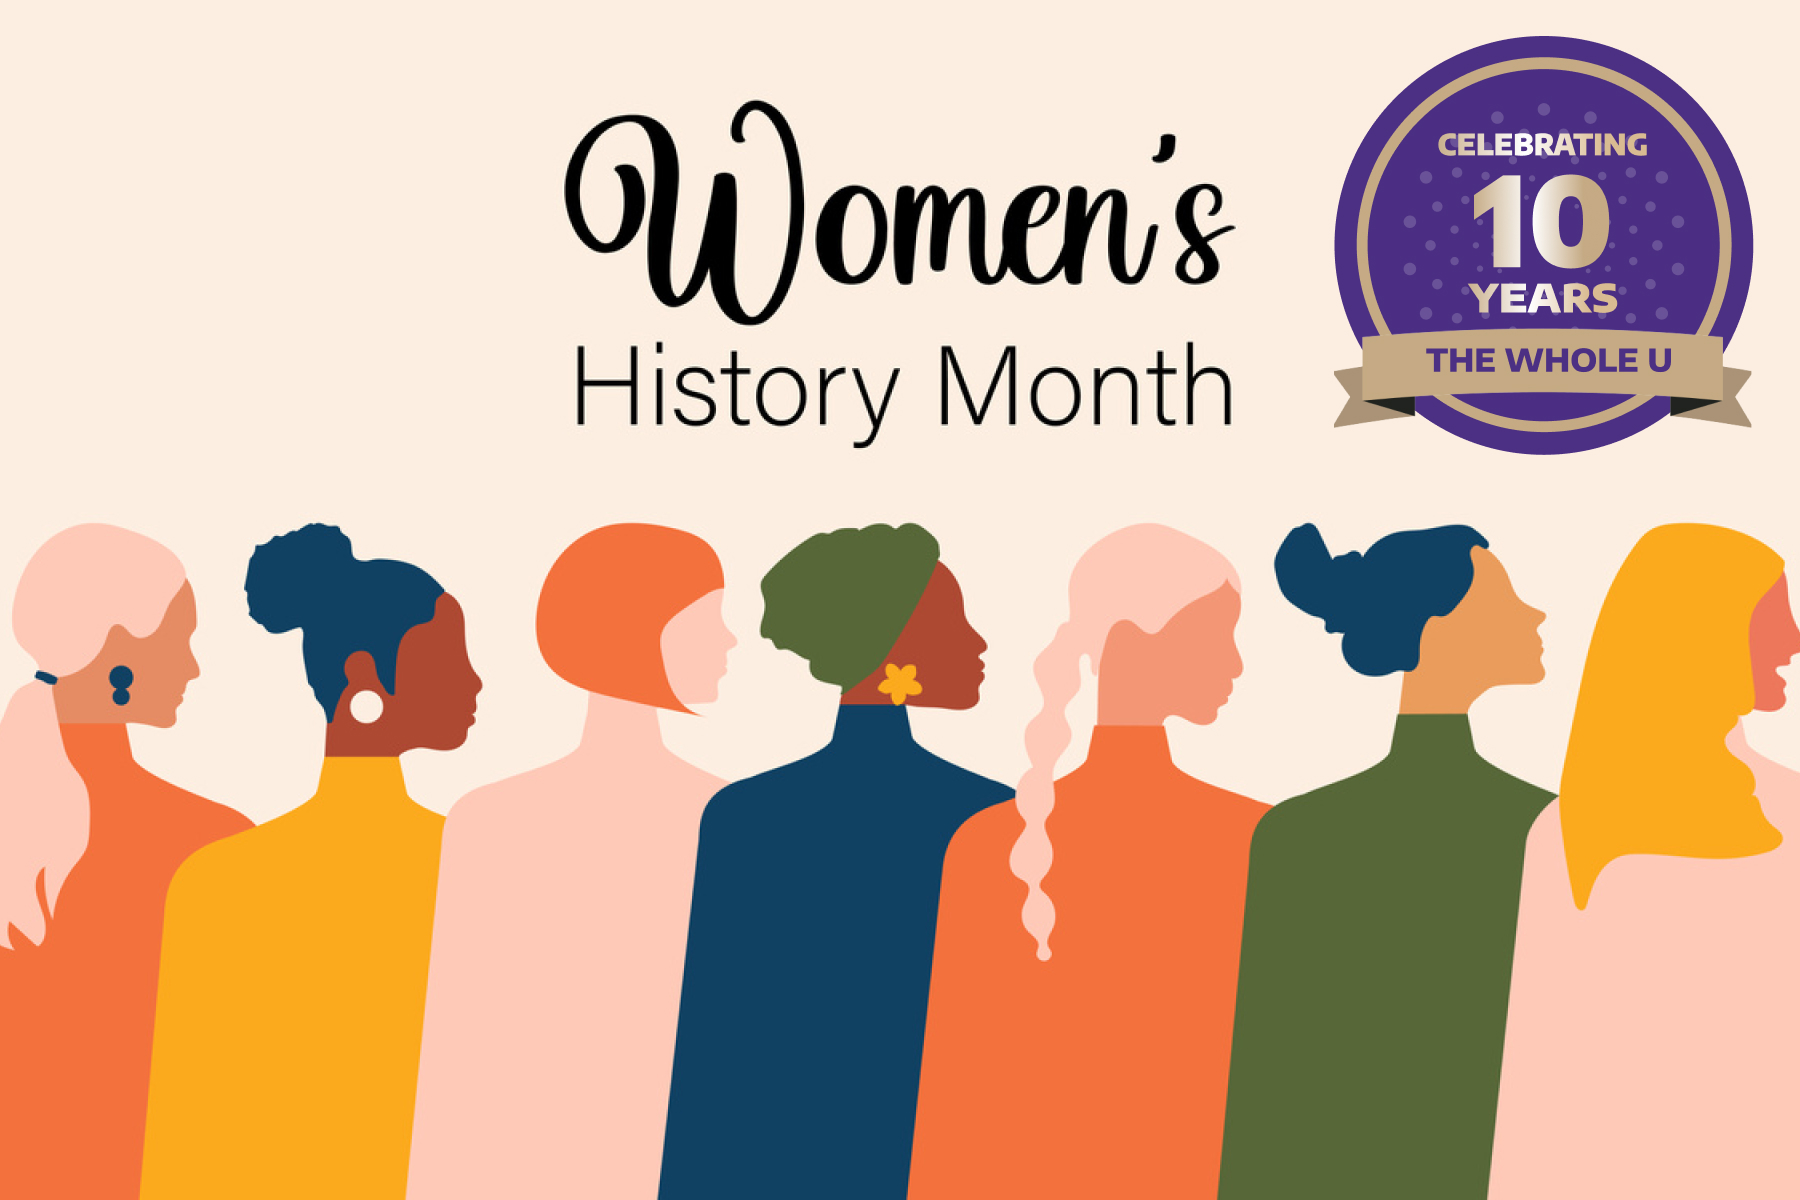 http://thewholeu.uw.edu/wp-content/uploads/featured-womens-history-month.jpg